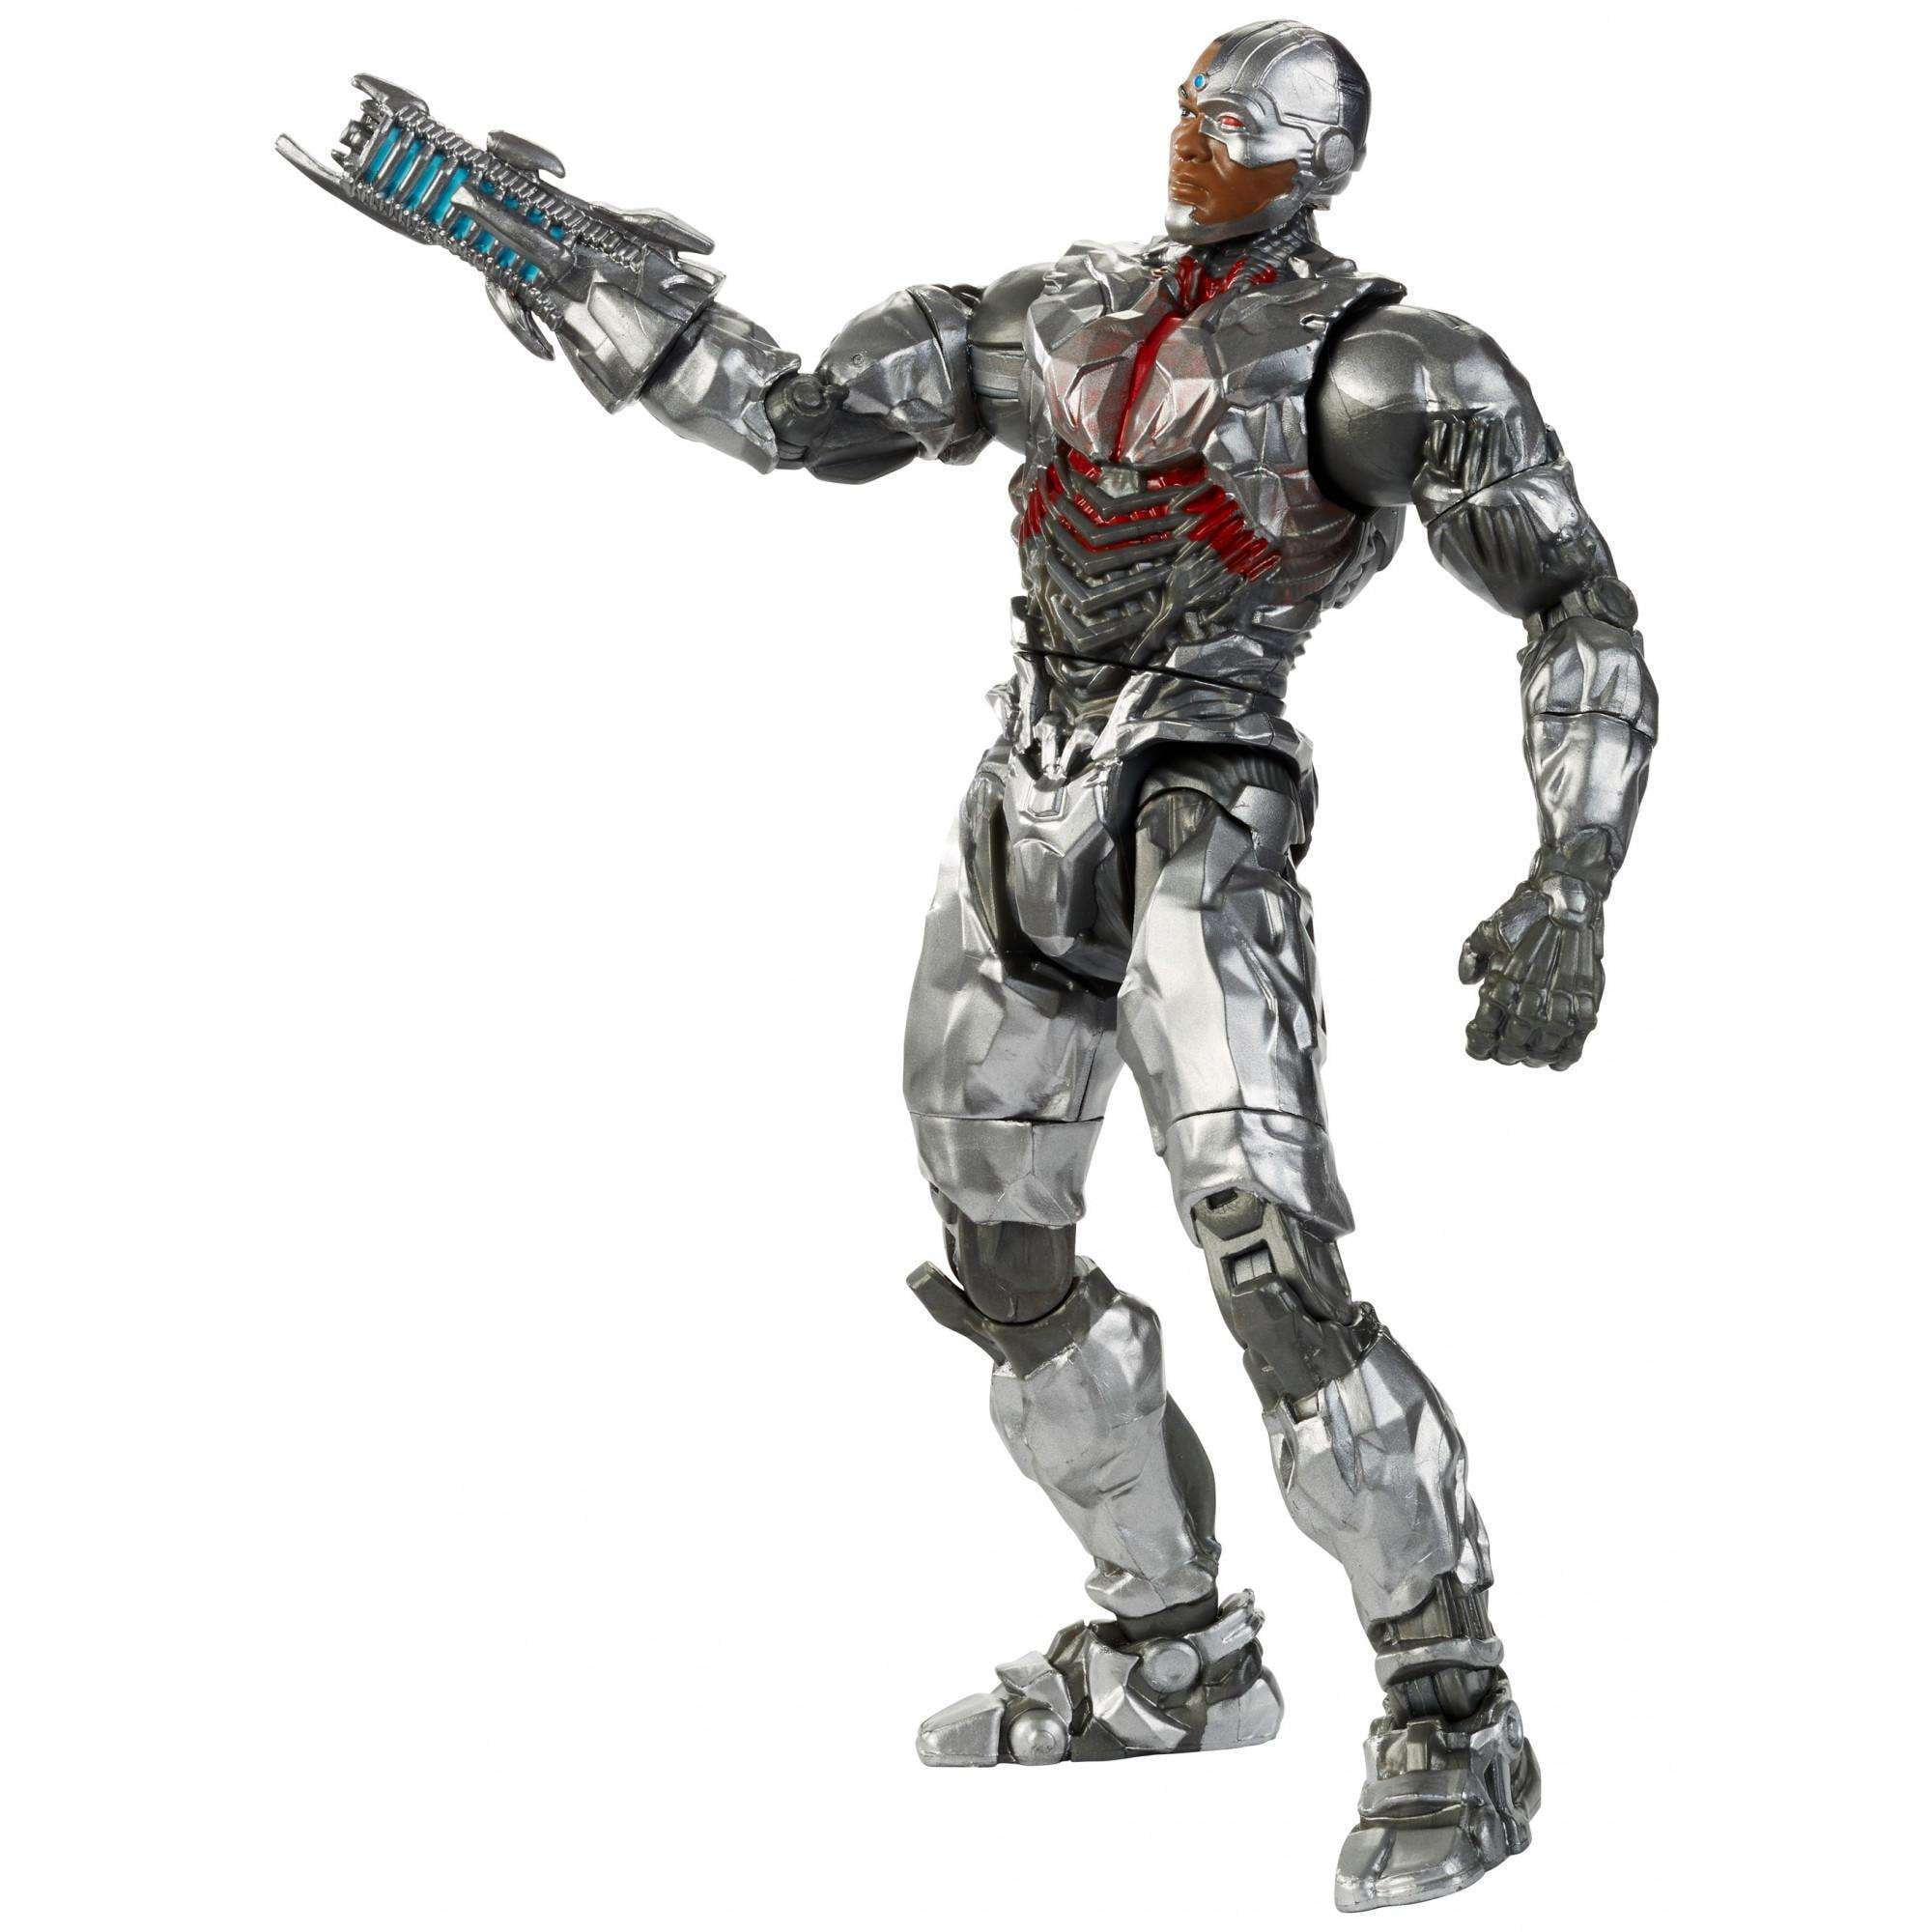 DC Comics Multiverse Justice League Movie Cyborg Exclusive Action Figure 6 Inch 